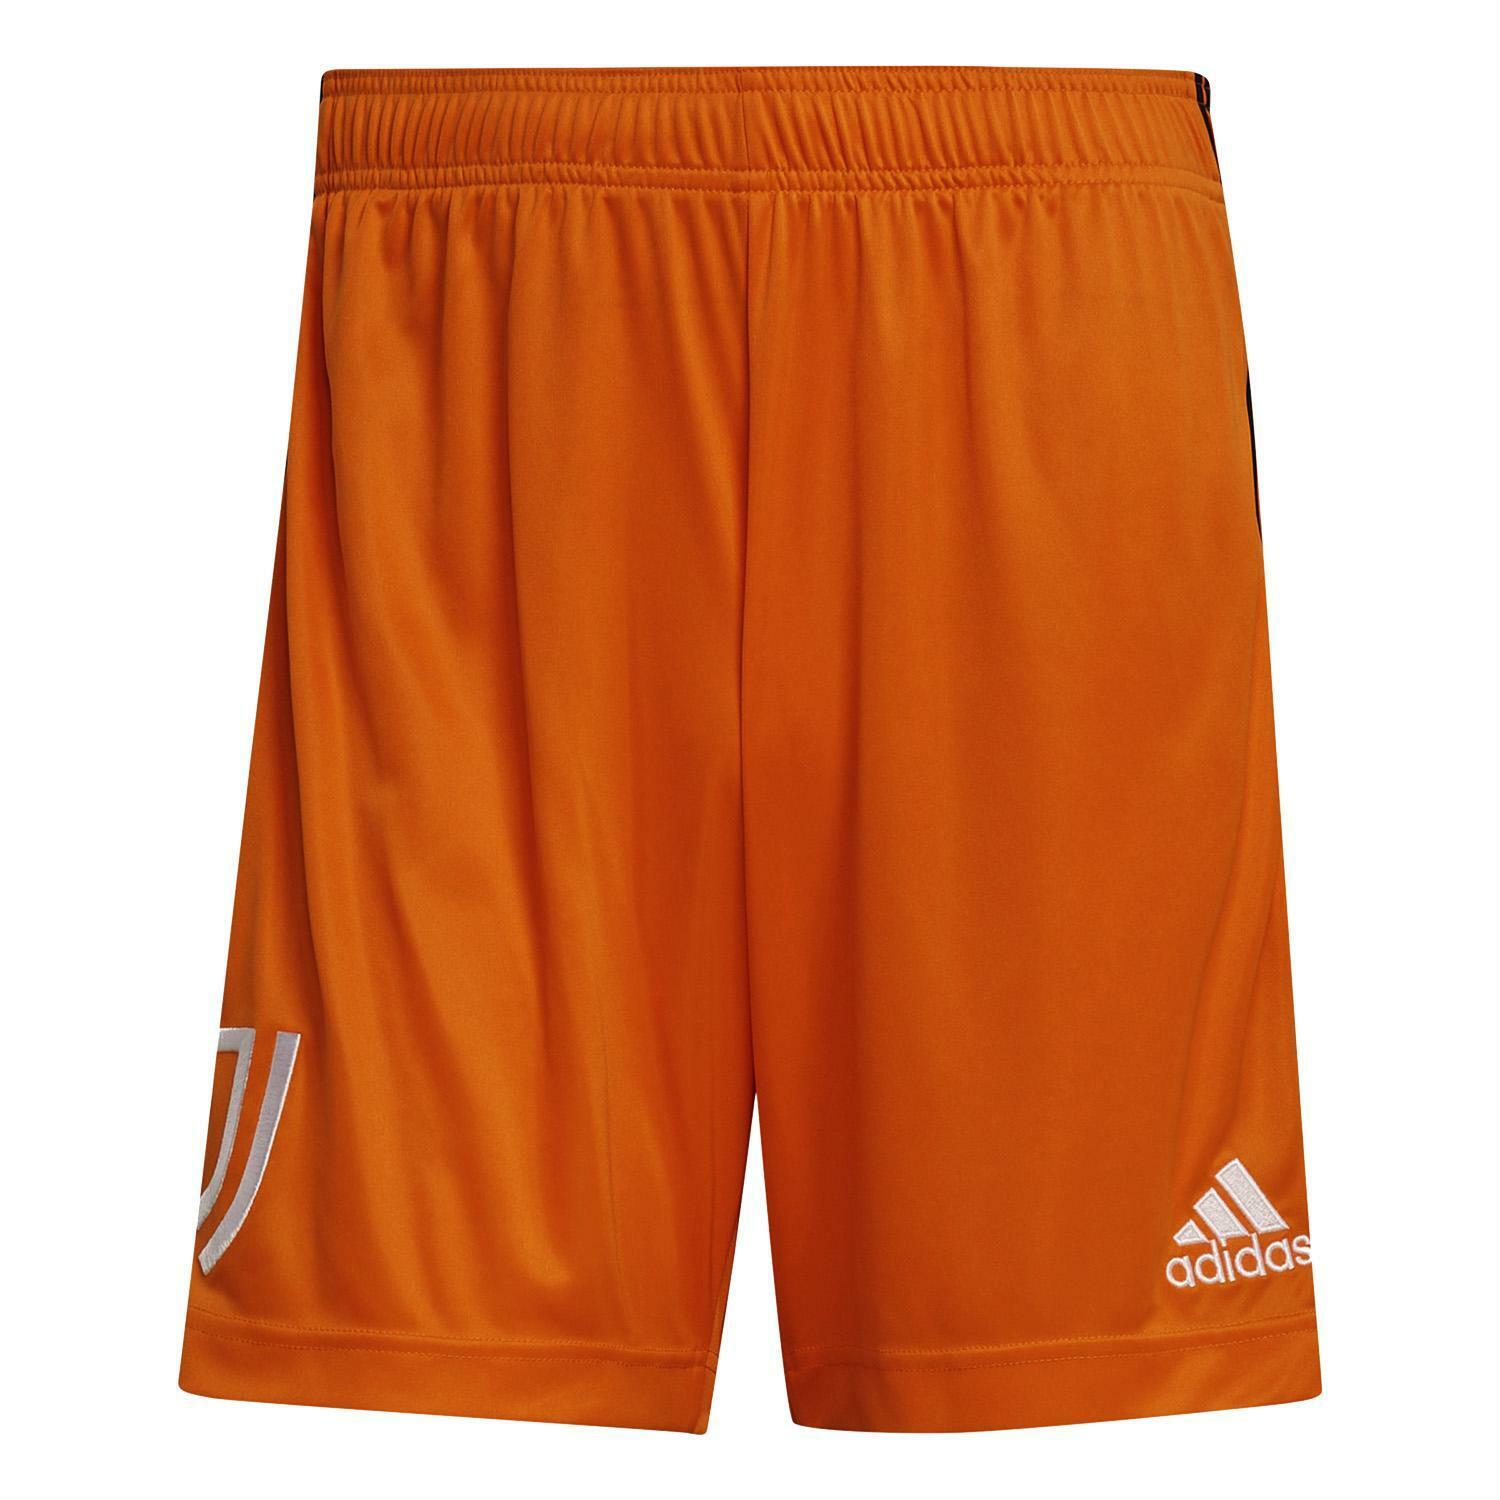 Adidas short third 20/21 juventus pantaloncini uomo arancioni fn1017